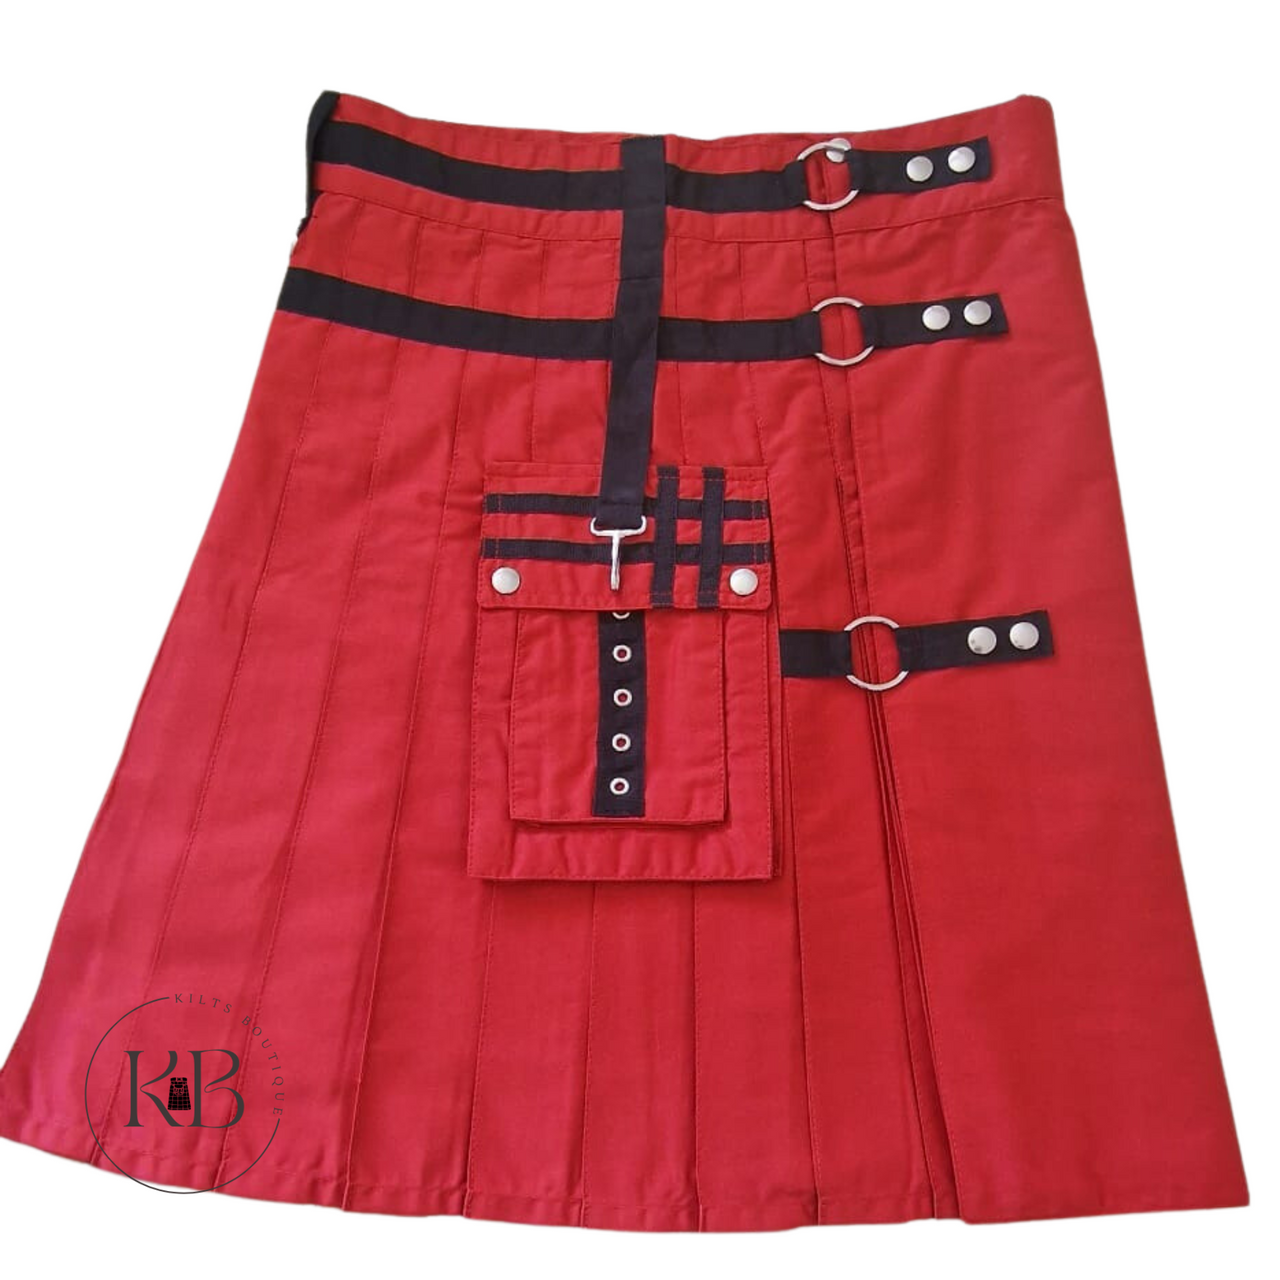 Red & Black Fashion Utility Kilt Detachable Apron Flap Pockets